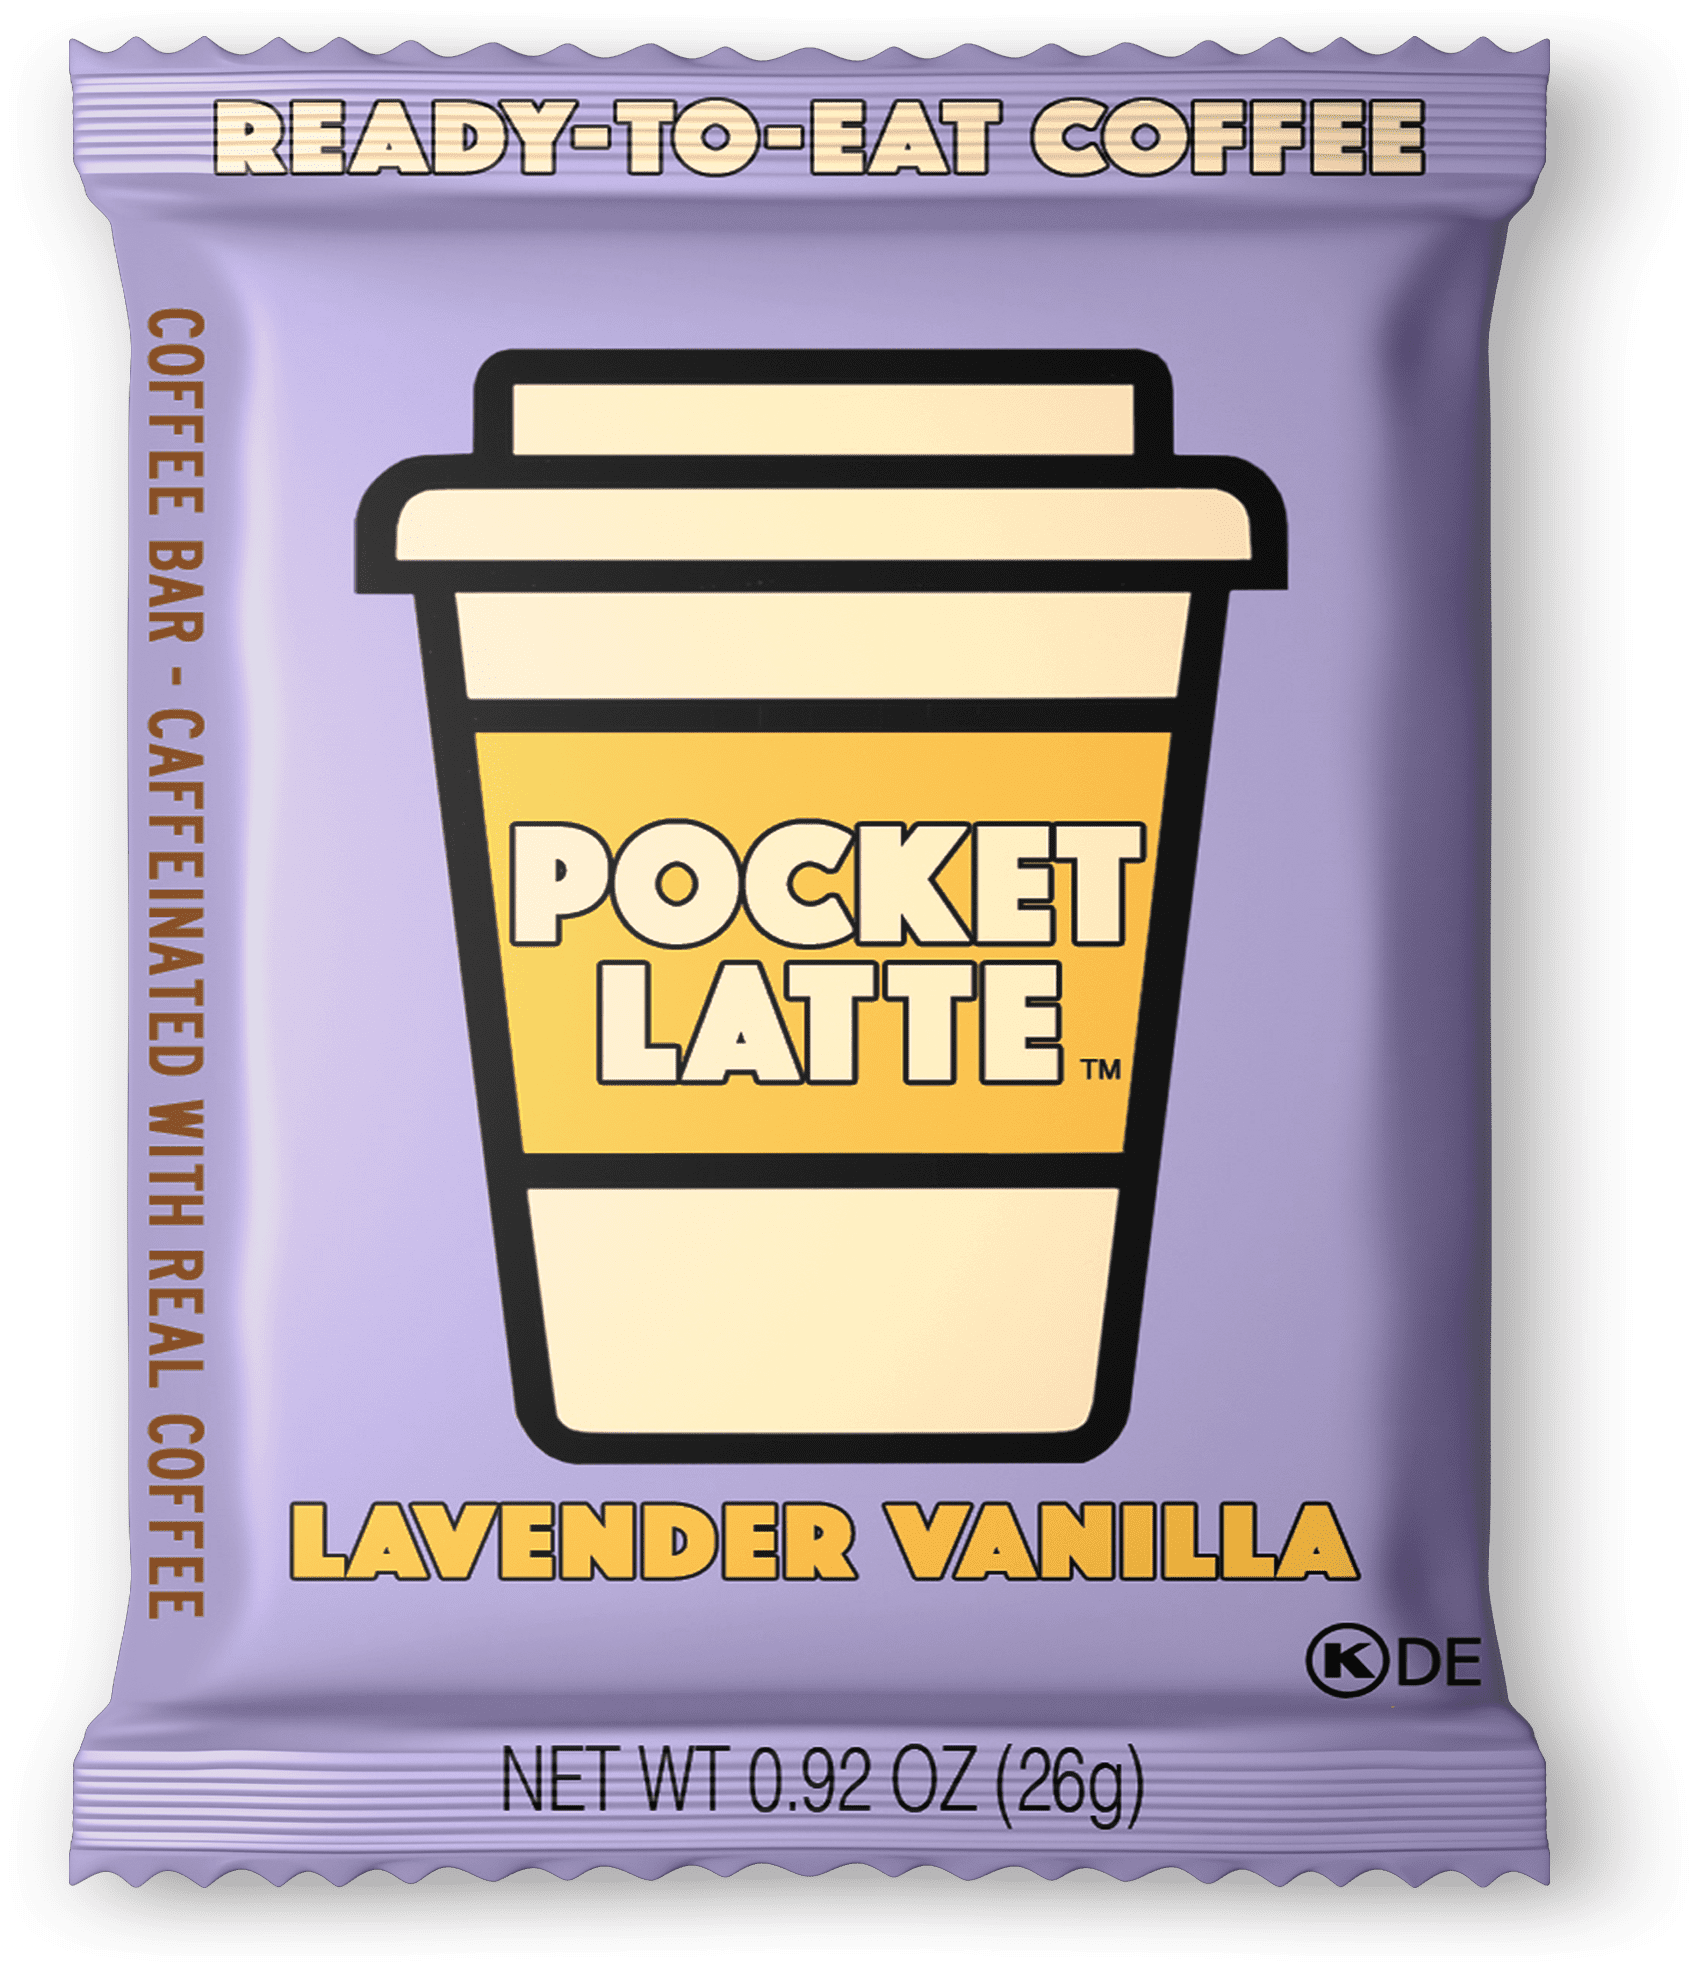 Pocket Latte ''Lavender Vanilla'' Coffee Bar 8 innerpacks per case